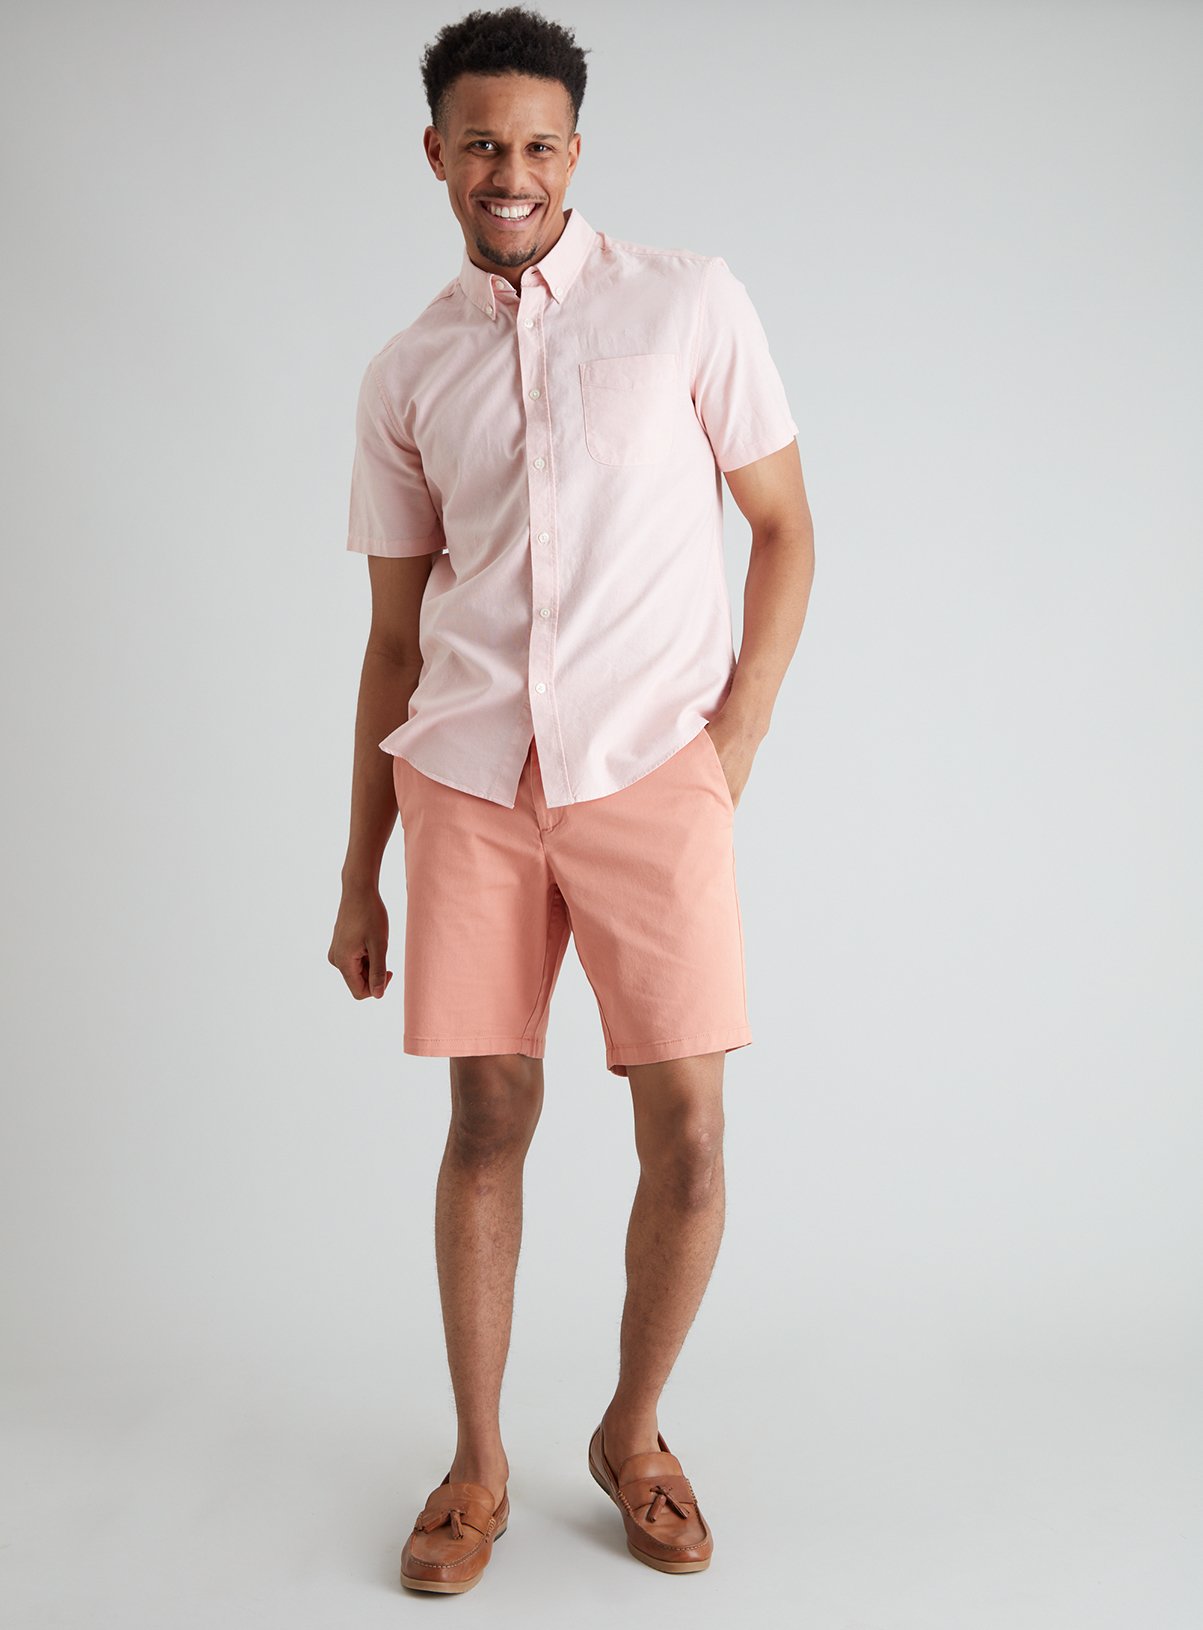 Salmon Pink Chino Shorts Review